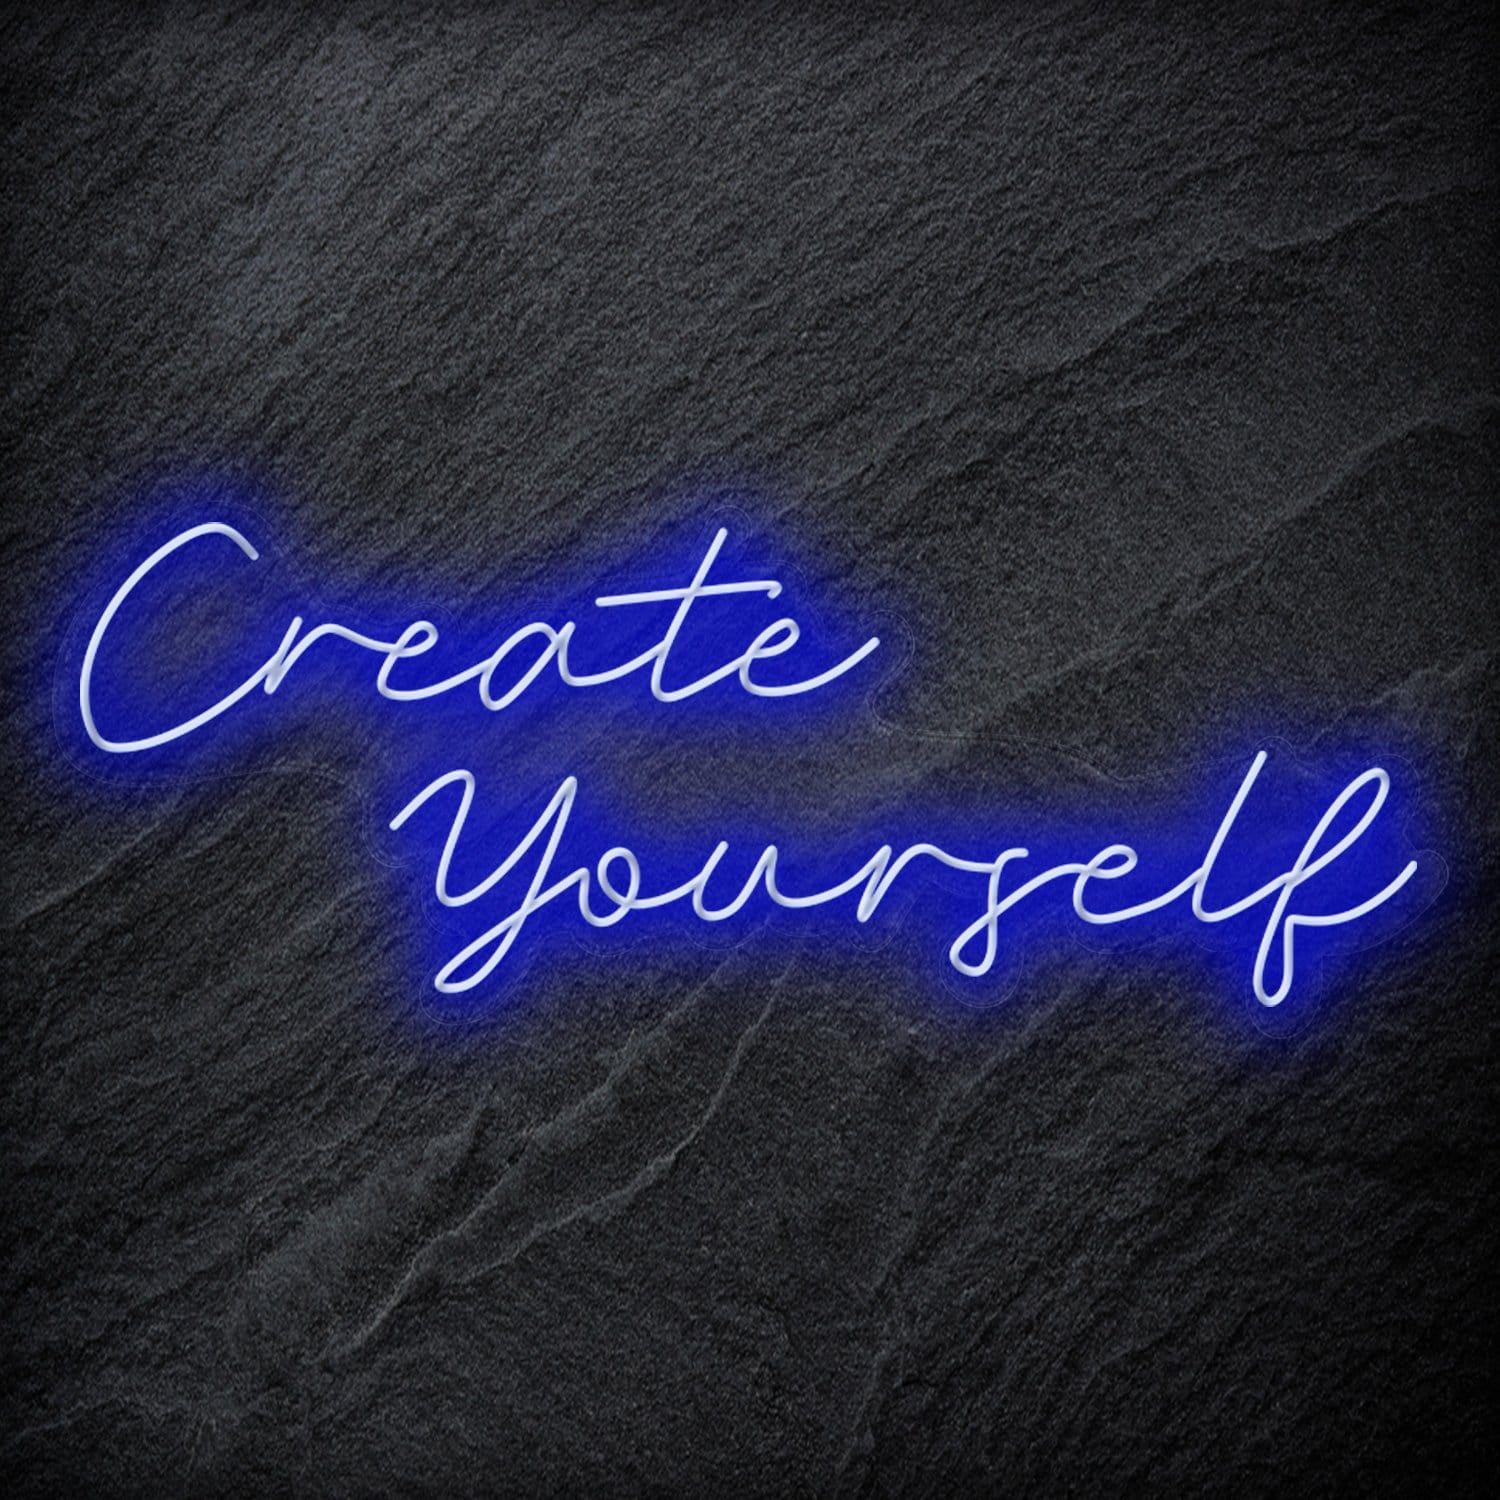 "Create Yourself" LED Neon Schriftzug Sign - NEONEVERGLOW